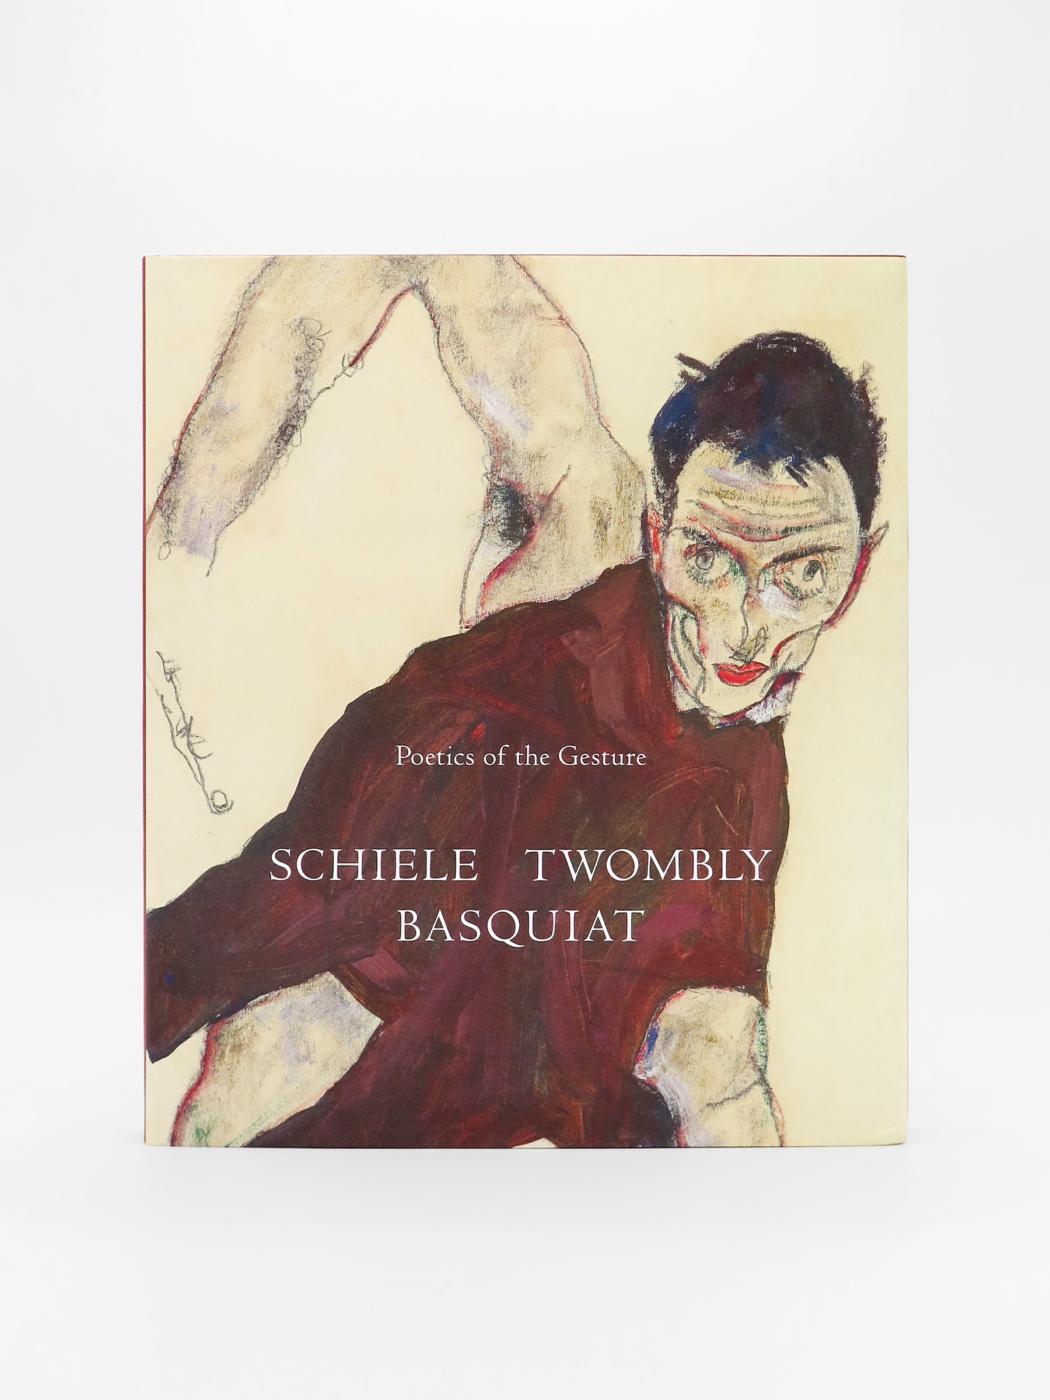 Egon Schiele, Cy Twombly, Jean-Michel Basquiat, Poetics of the Gesture